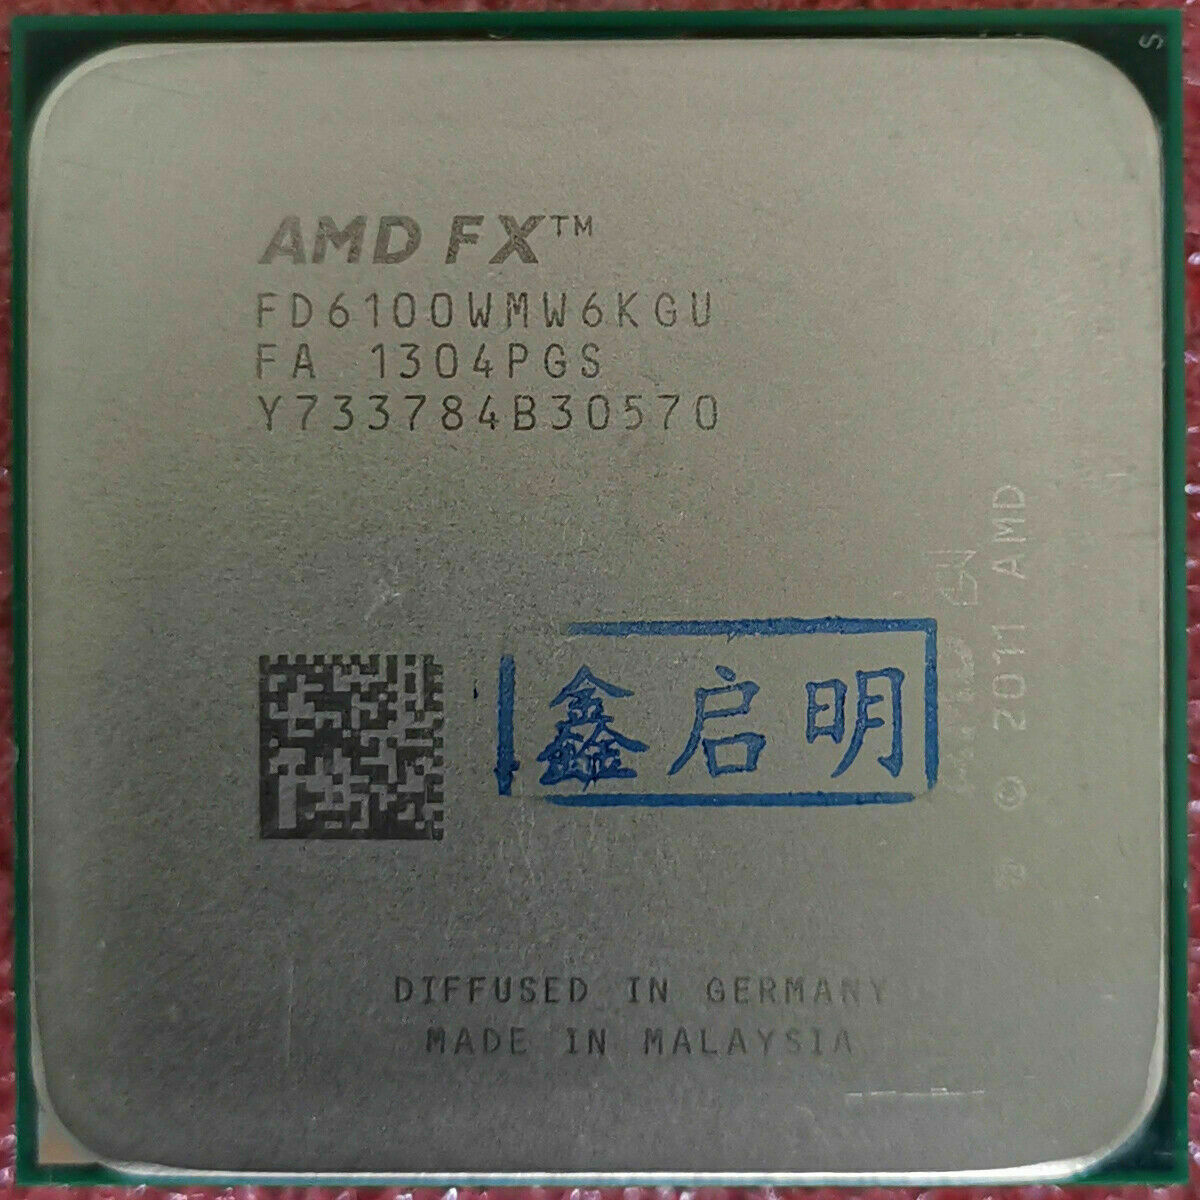 AMD Series FX-6100 FX-6300 FX-8120 FX-8300 FX-8350 AM3+ CPU Processor 